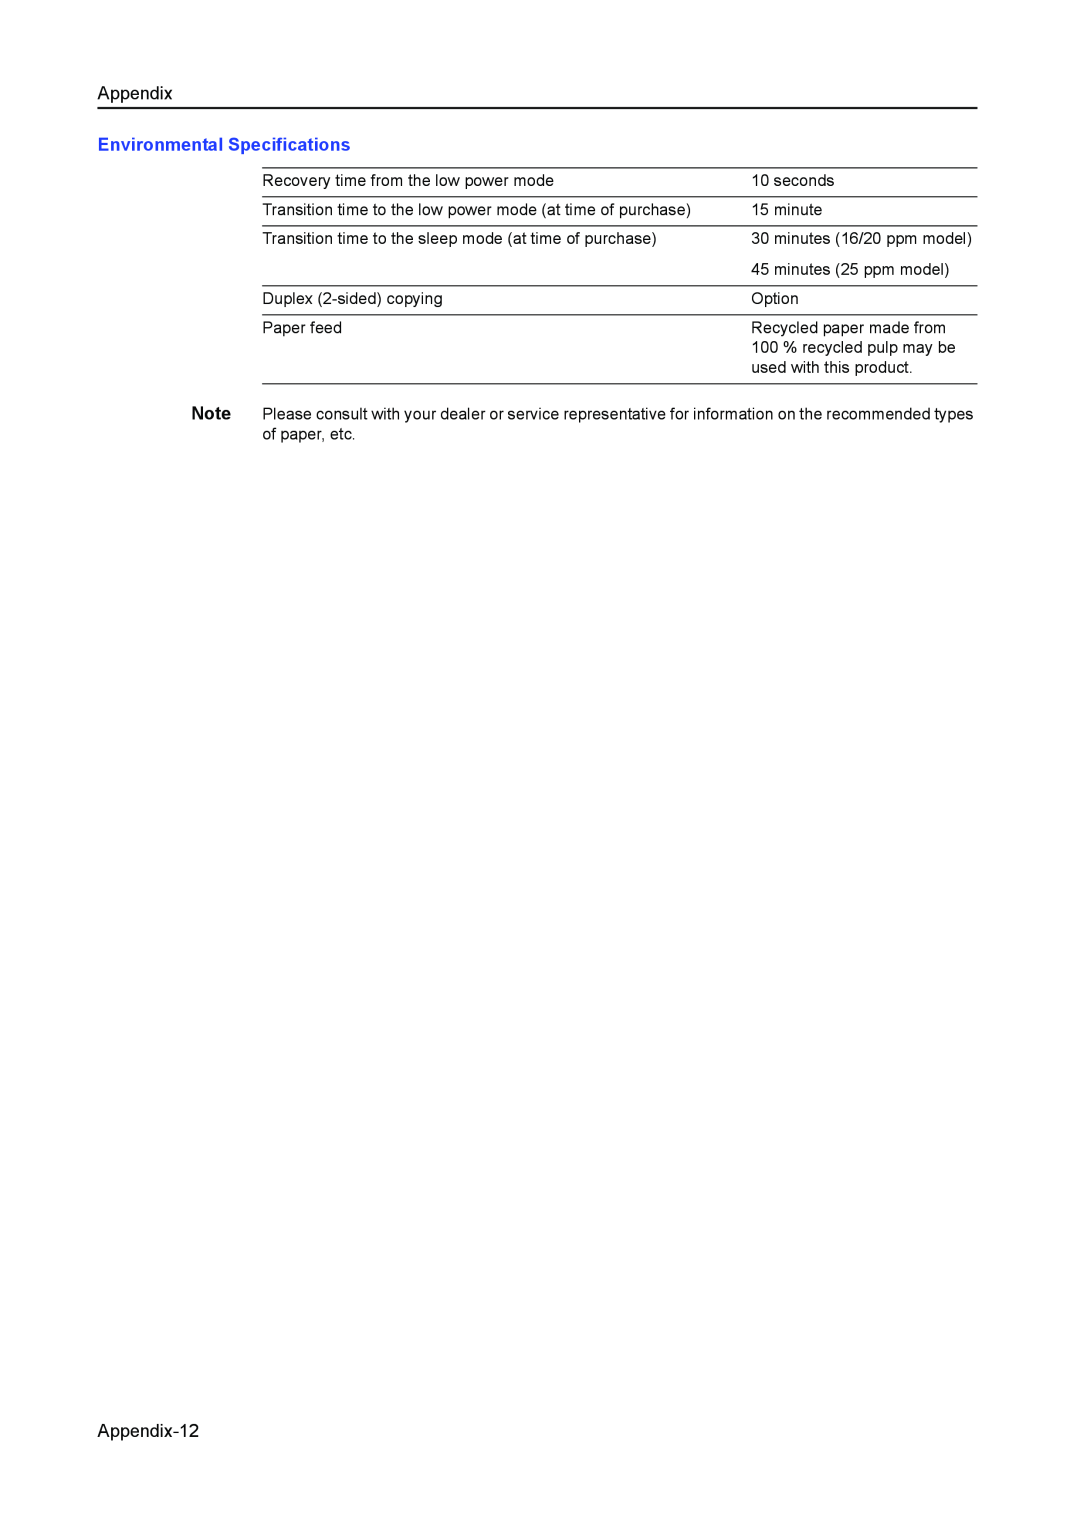 Kyocera 1650, 2050, 2550 manual Environmental Specifications, Appendix-12 